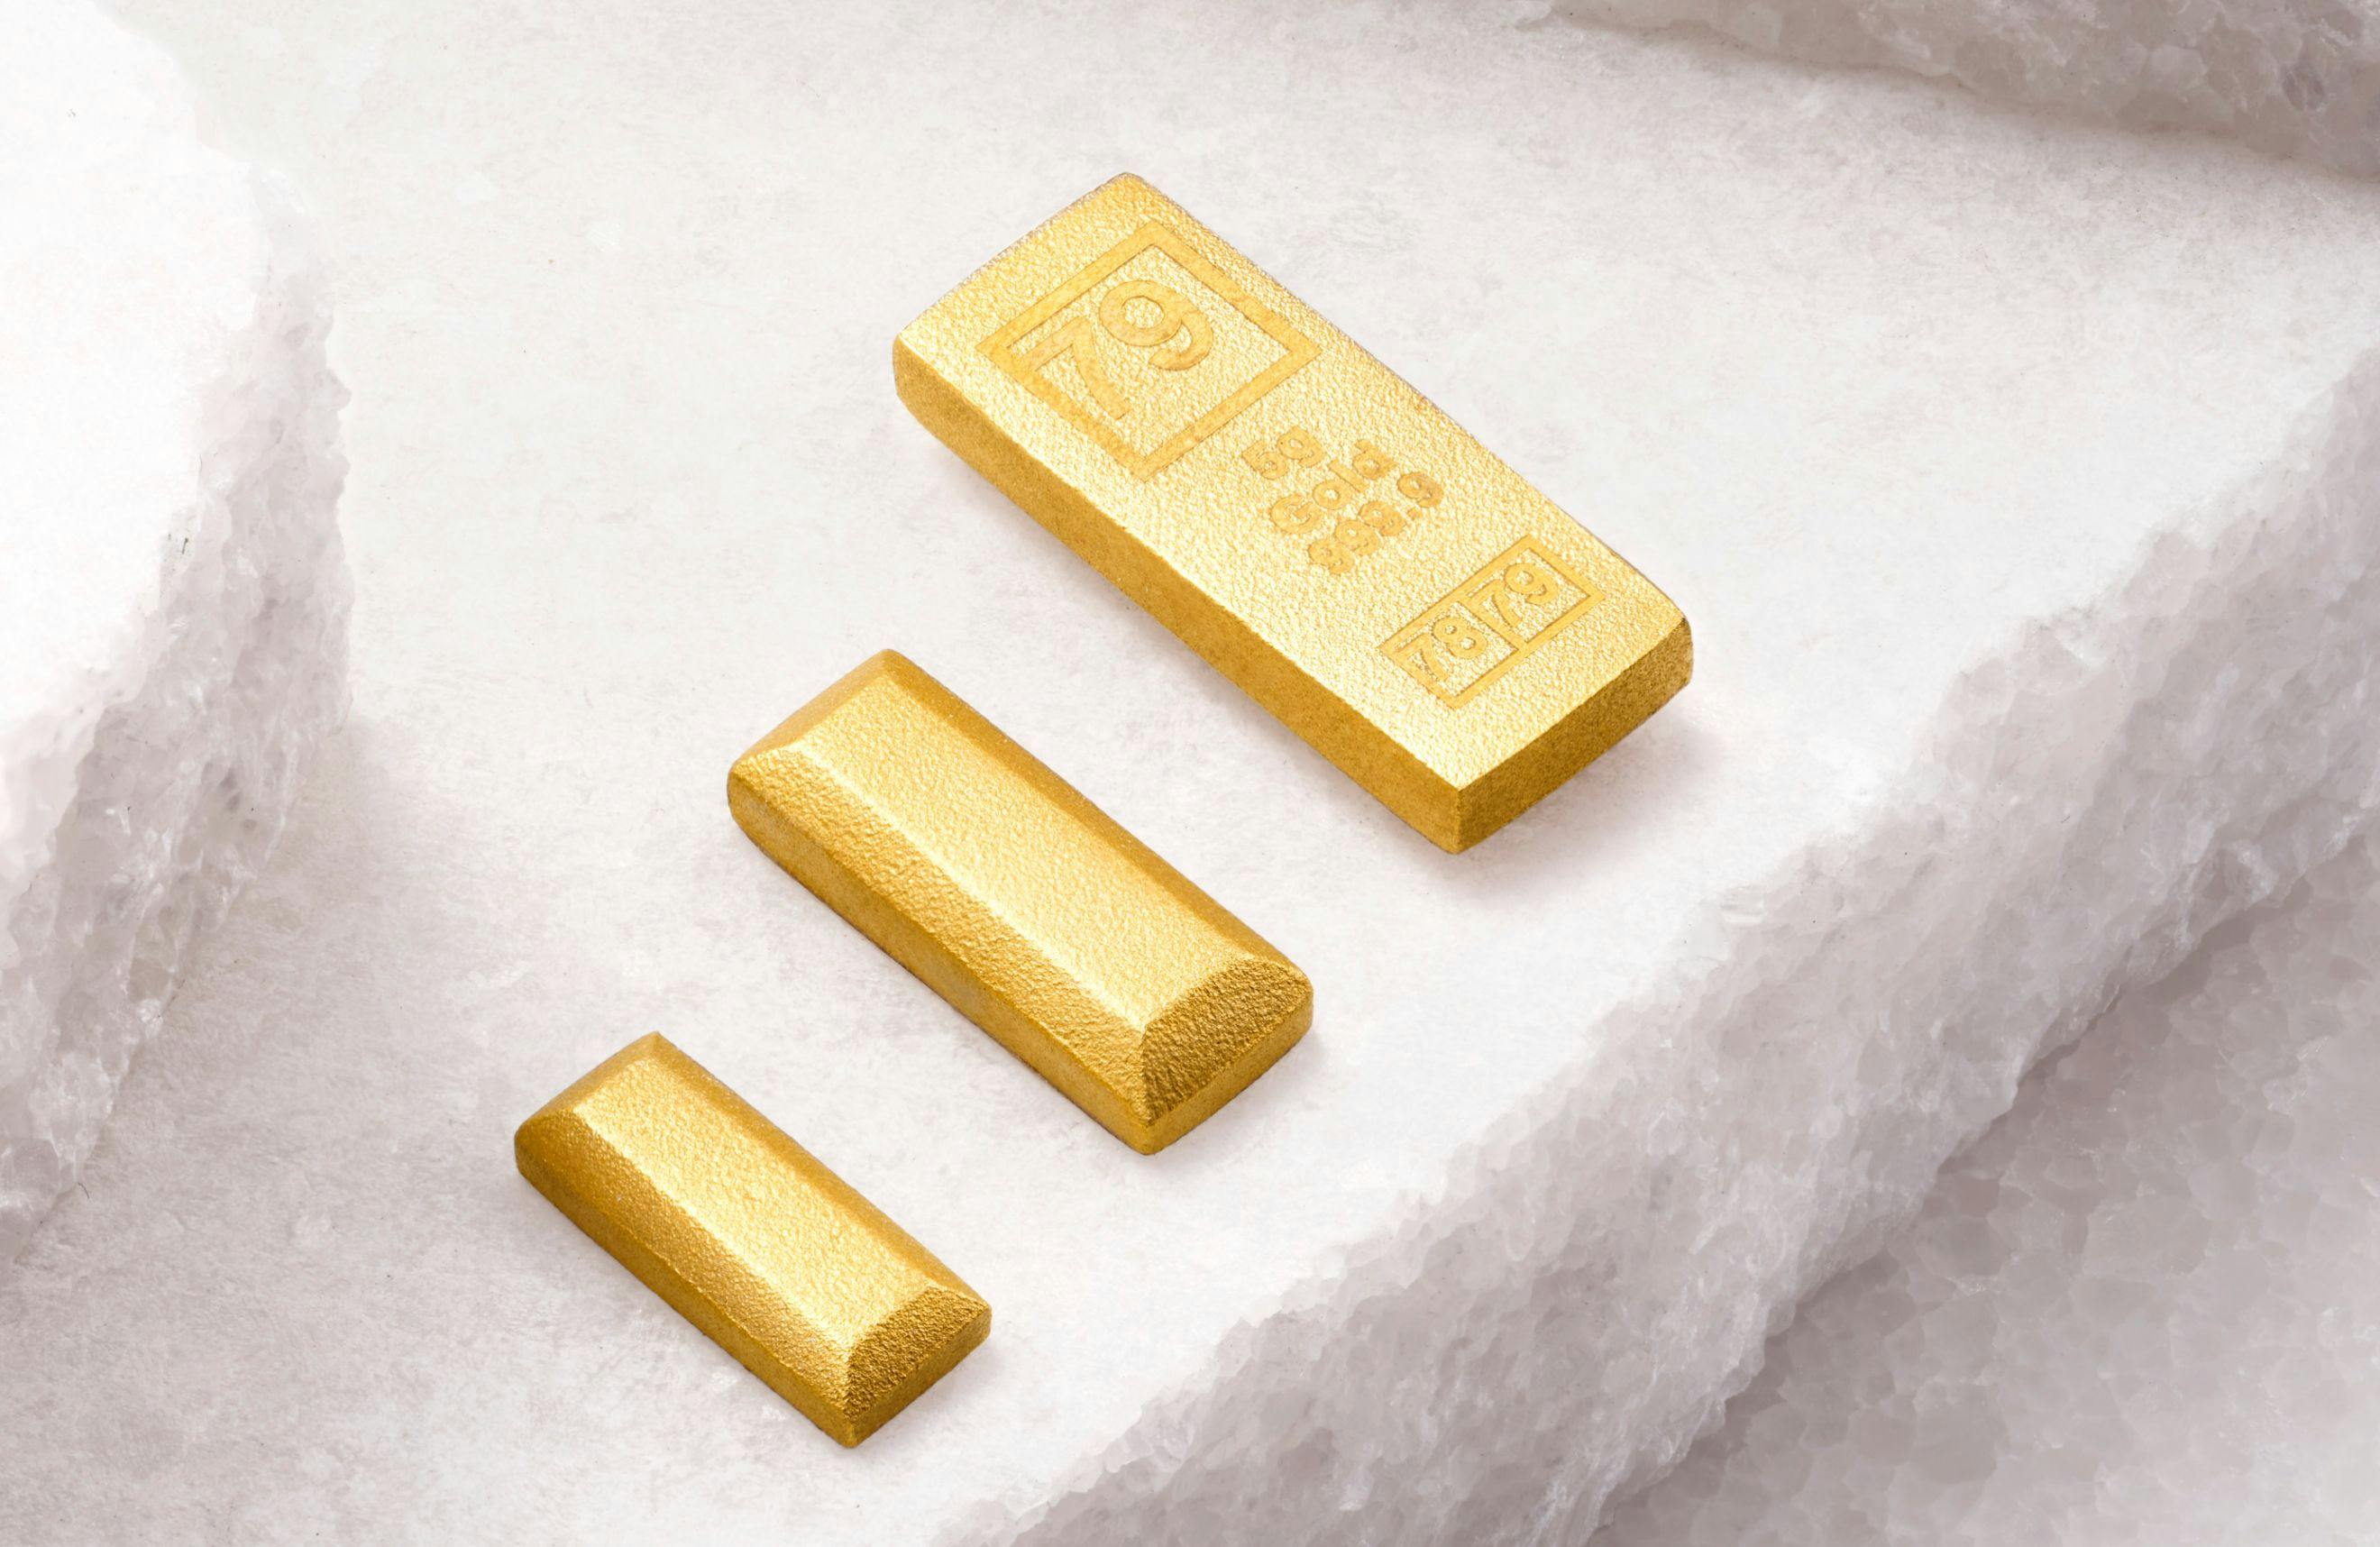 Model image - gold Bullion